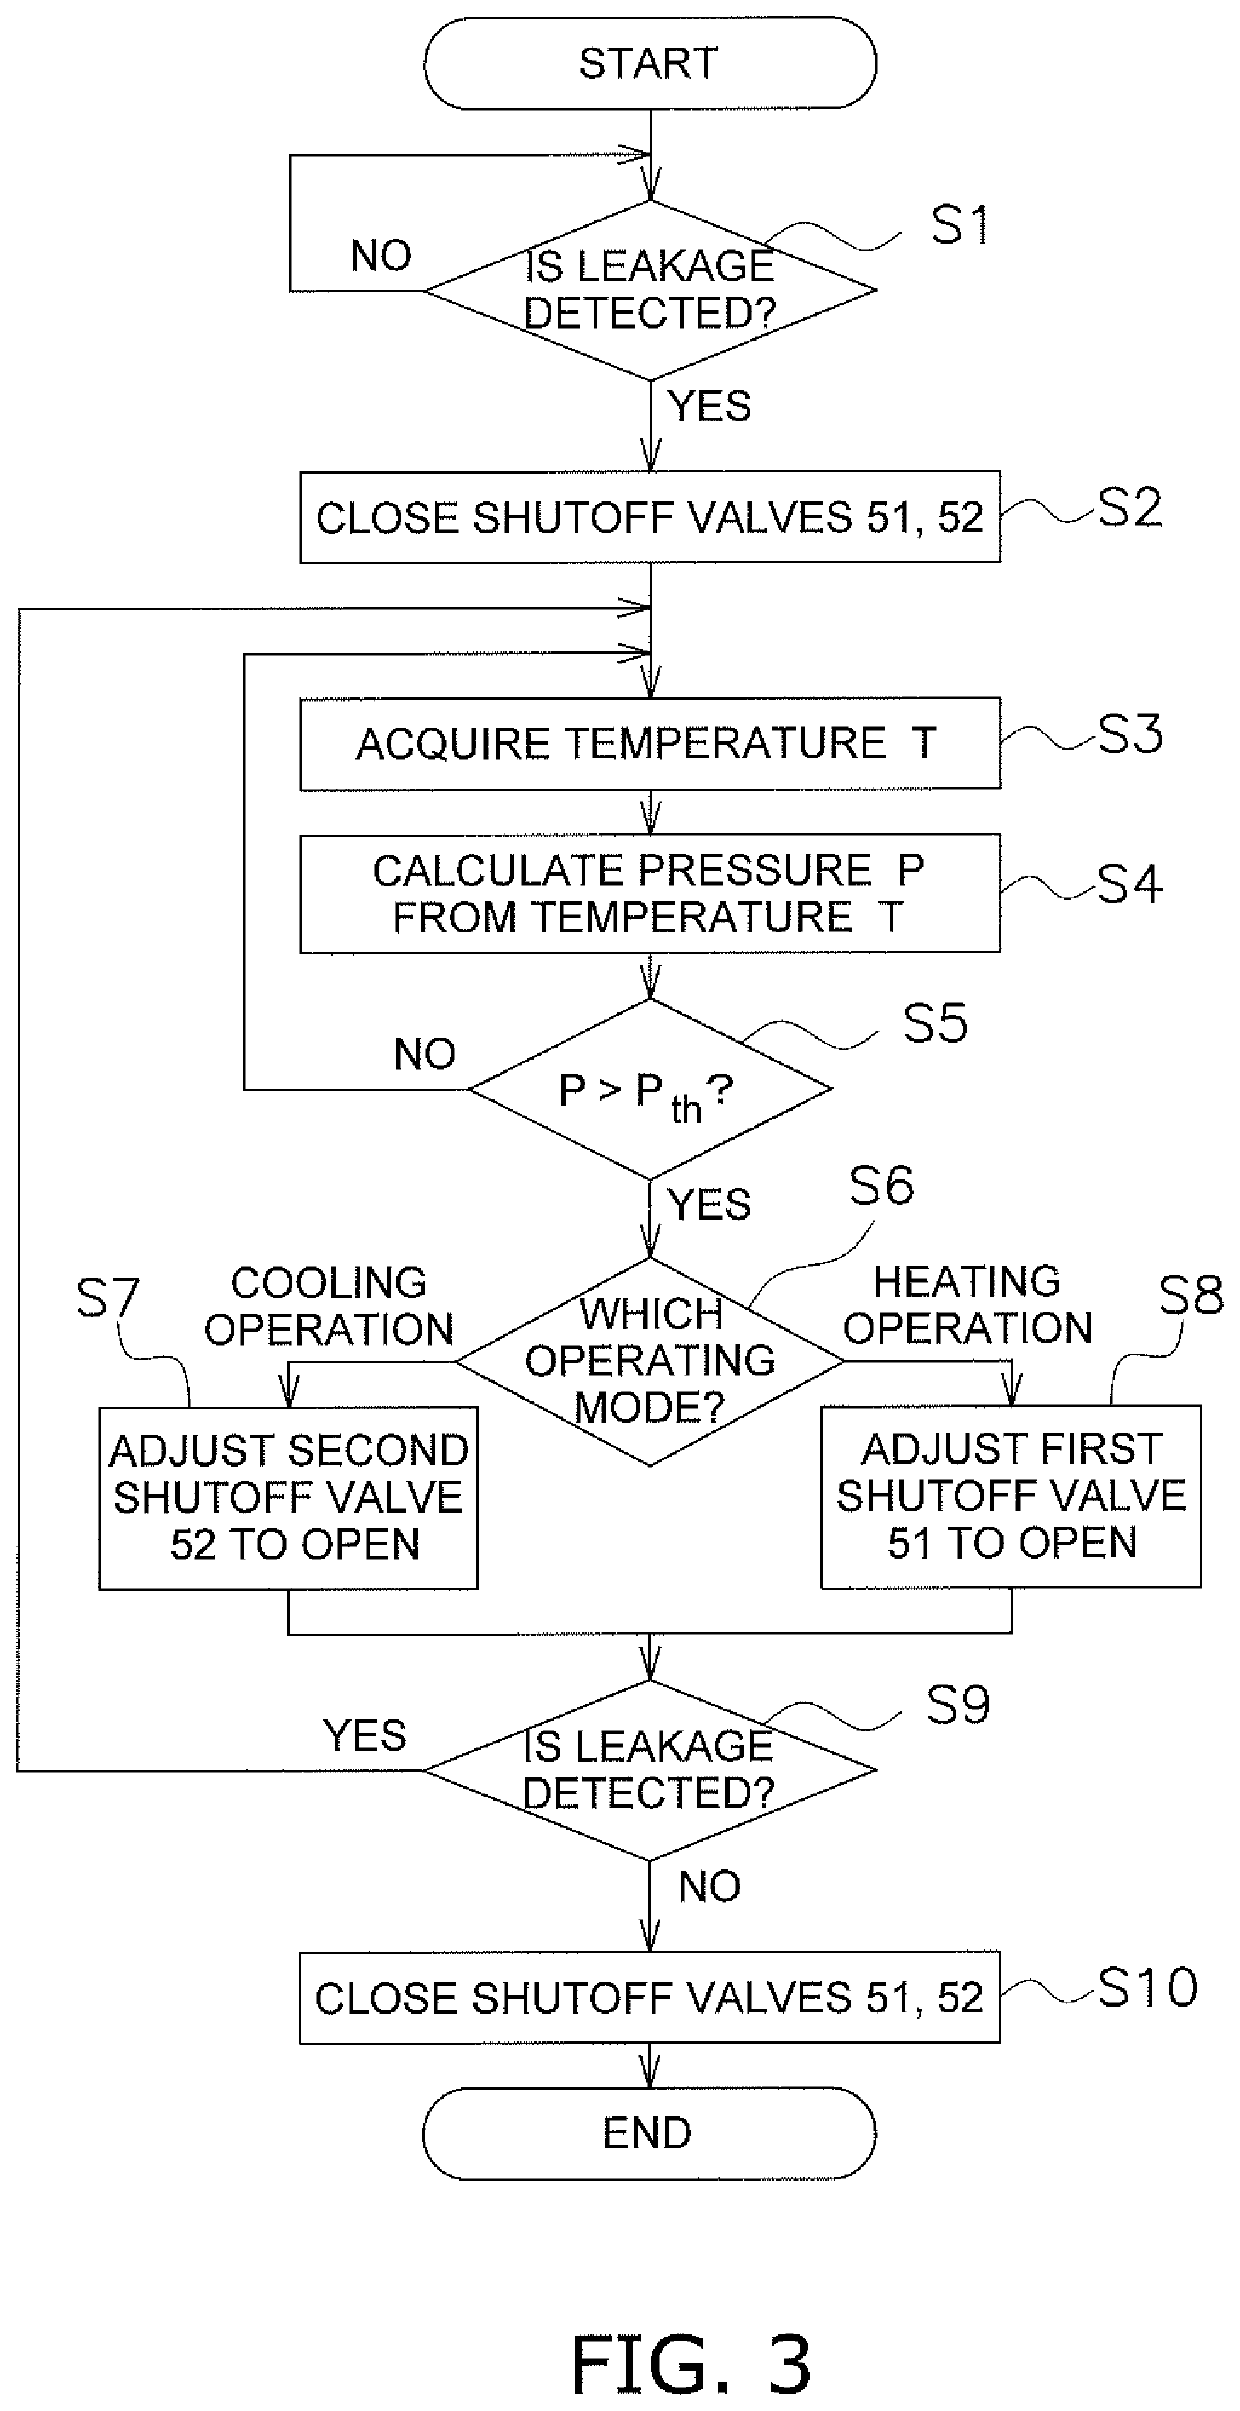 Refrigeration apparatus with shutoff valve